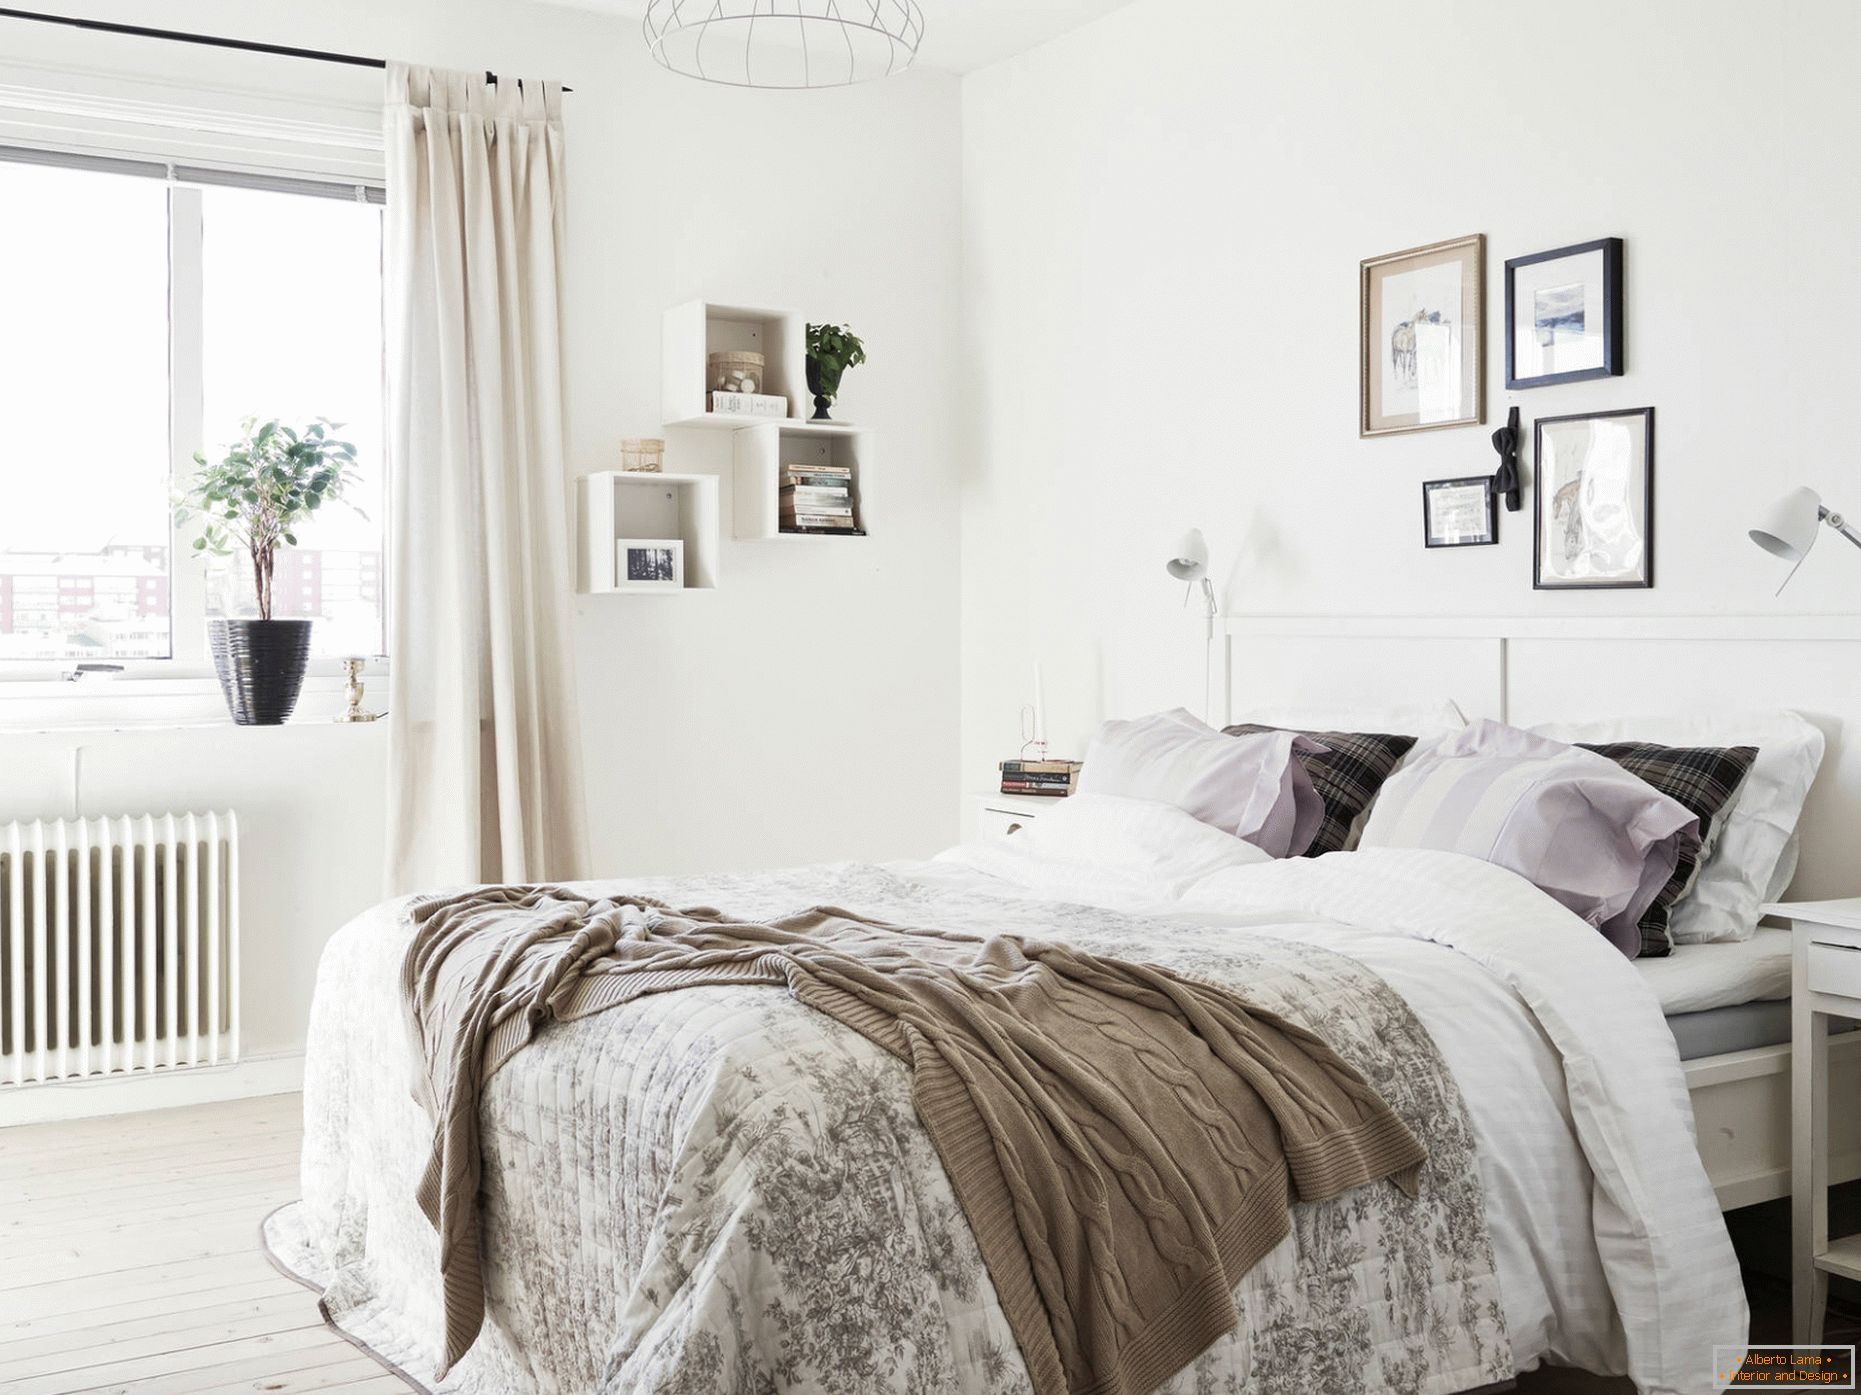 Scandinavian style in the interior of the bedroom